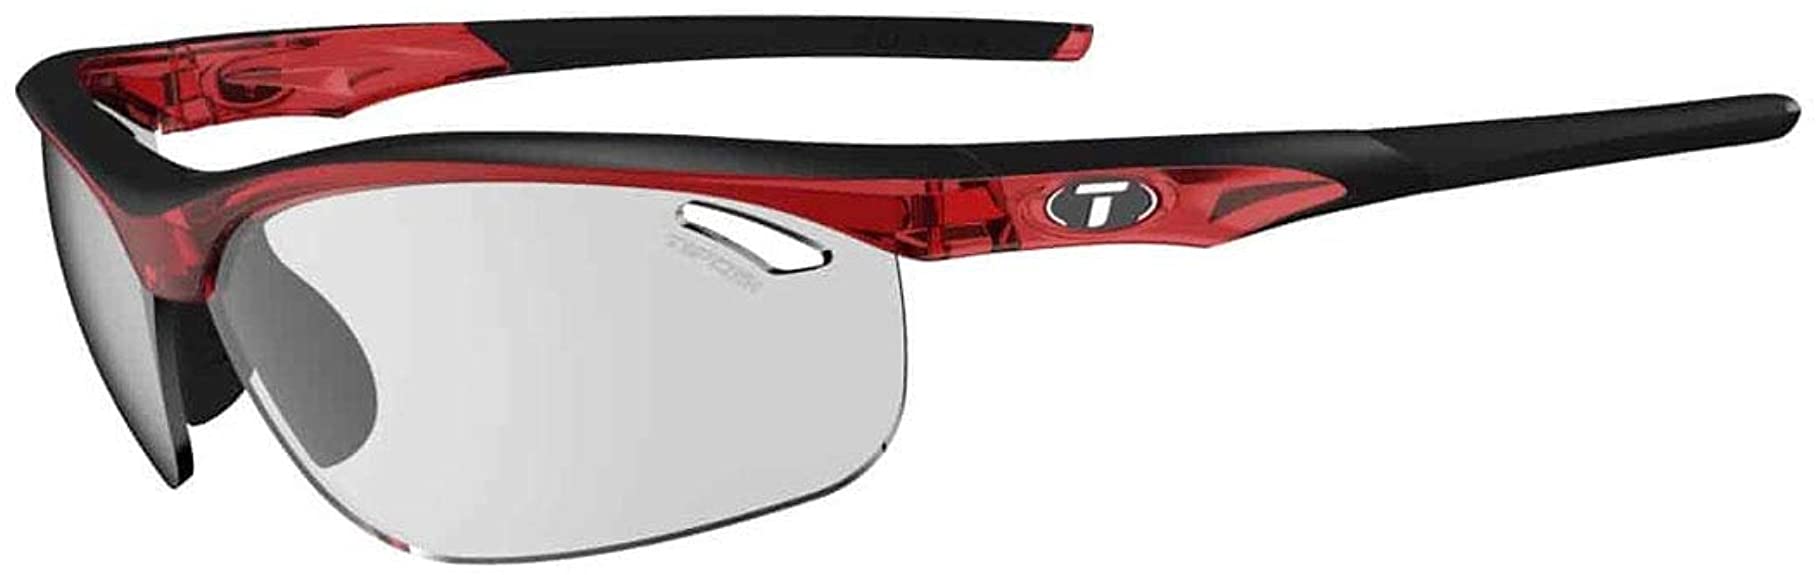 Mens Tifosi Veloce Regular Interchangeable Wrap Golf Sunglasses